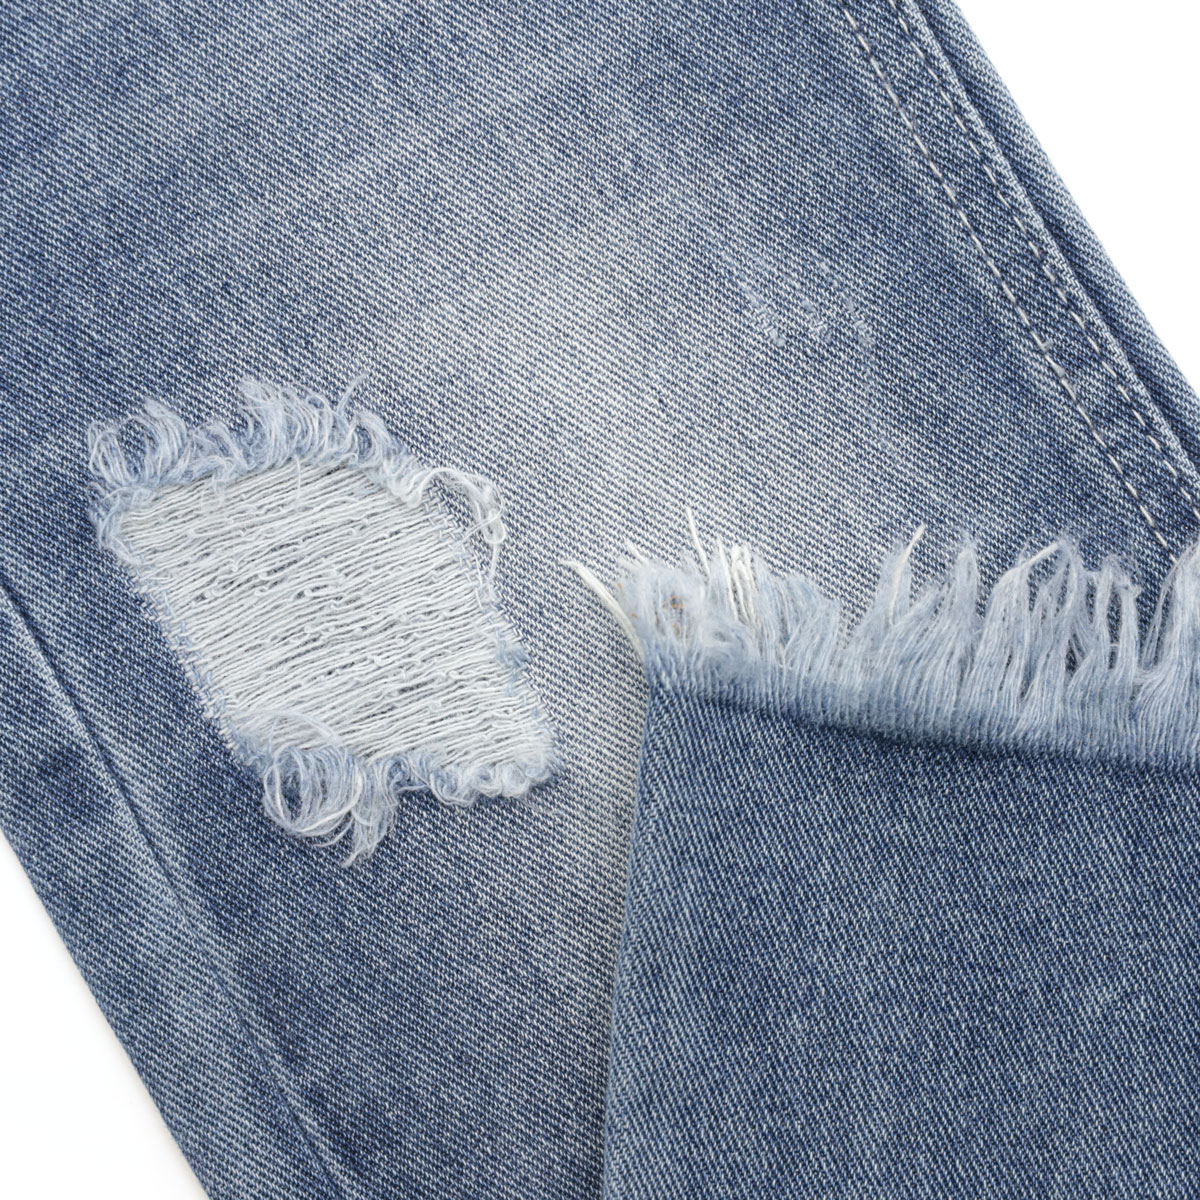 Overcapacity Hurting Denim Fabric Industry, Say Experts 1